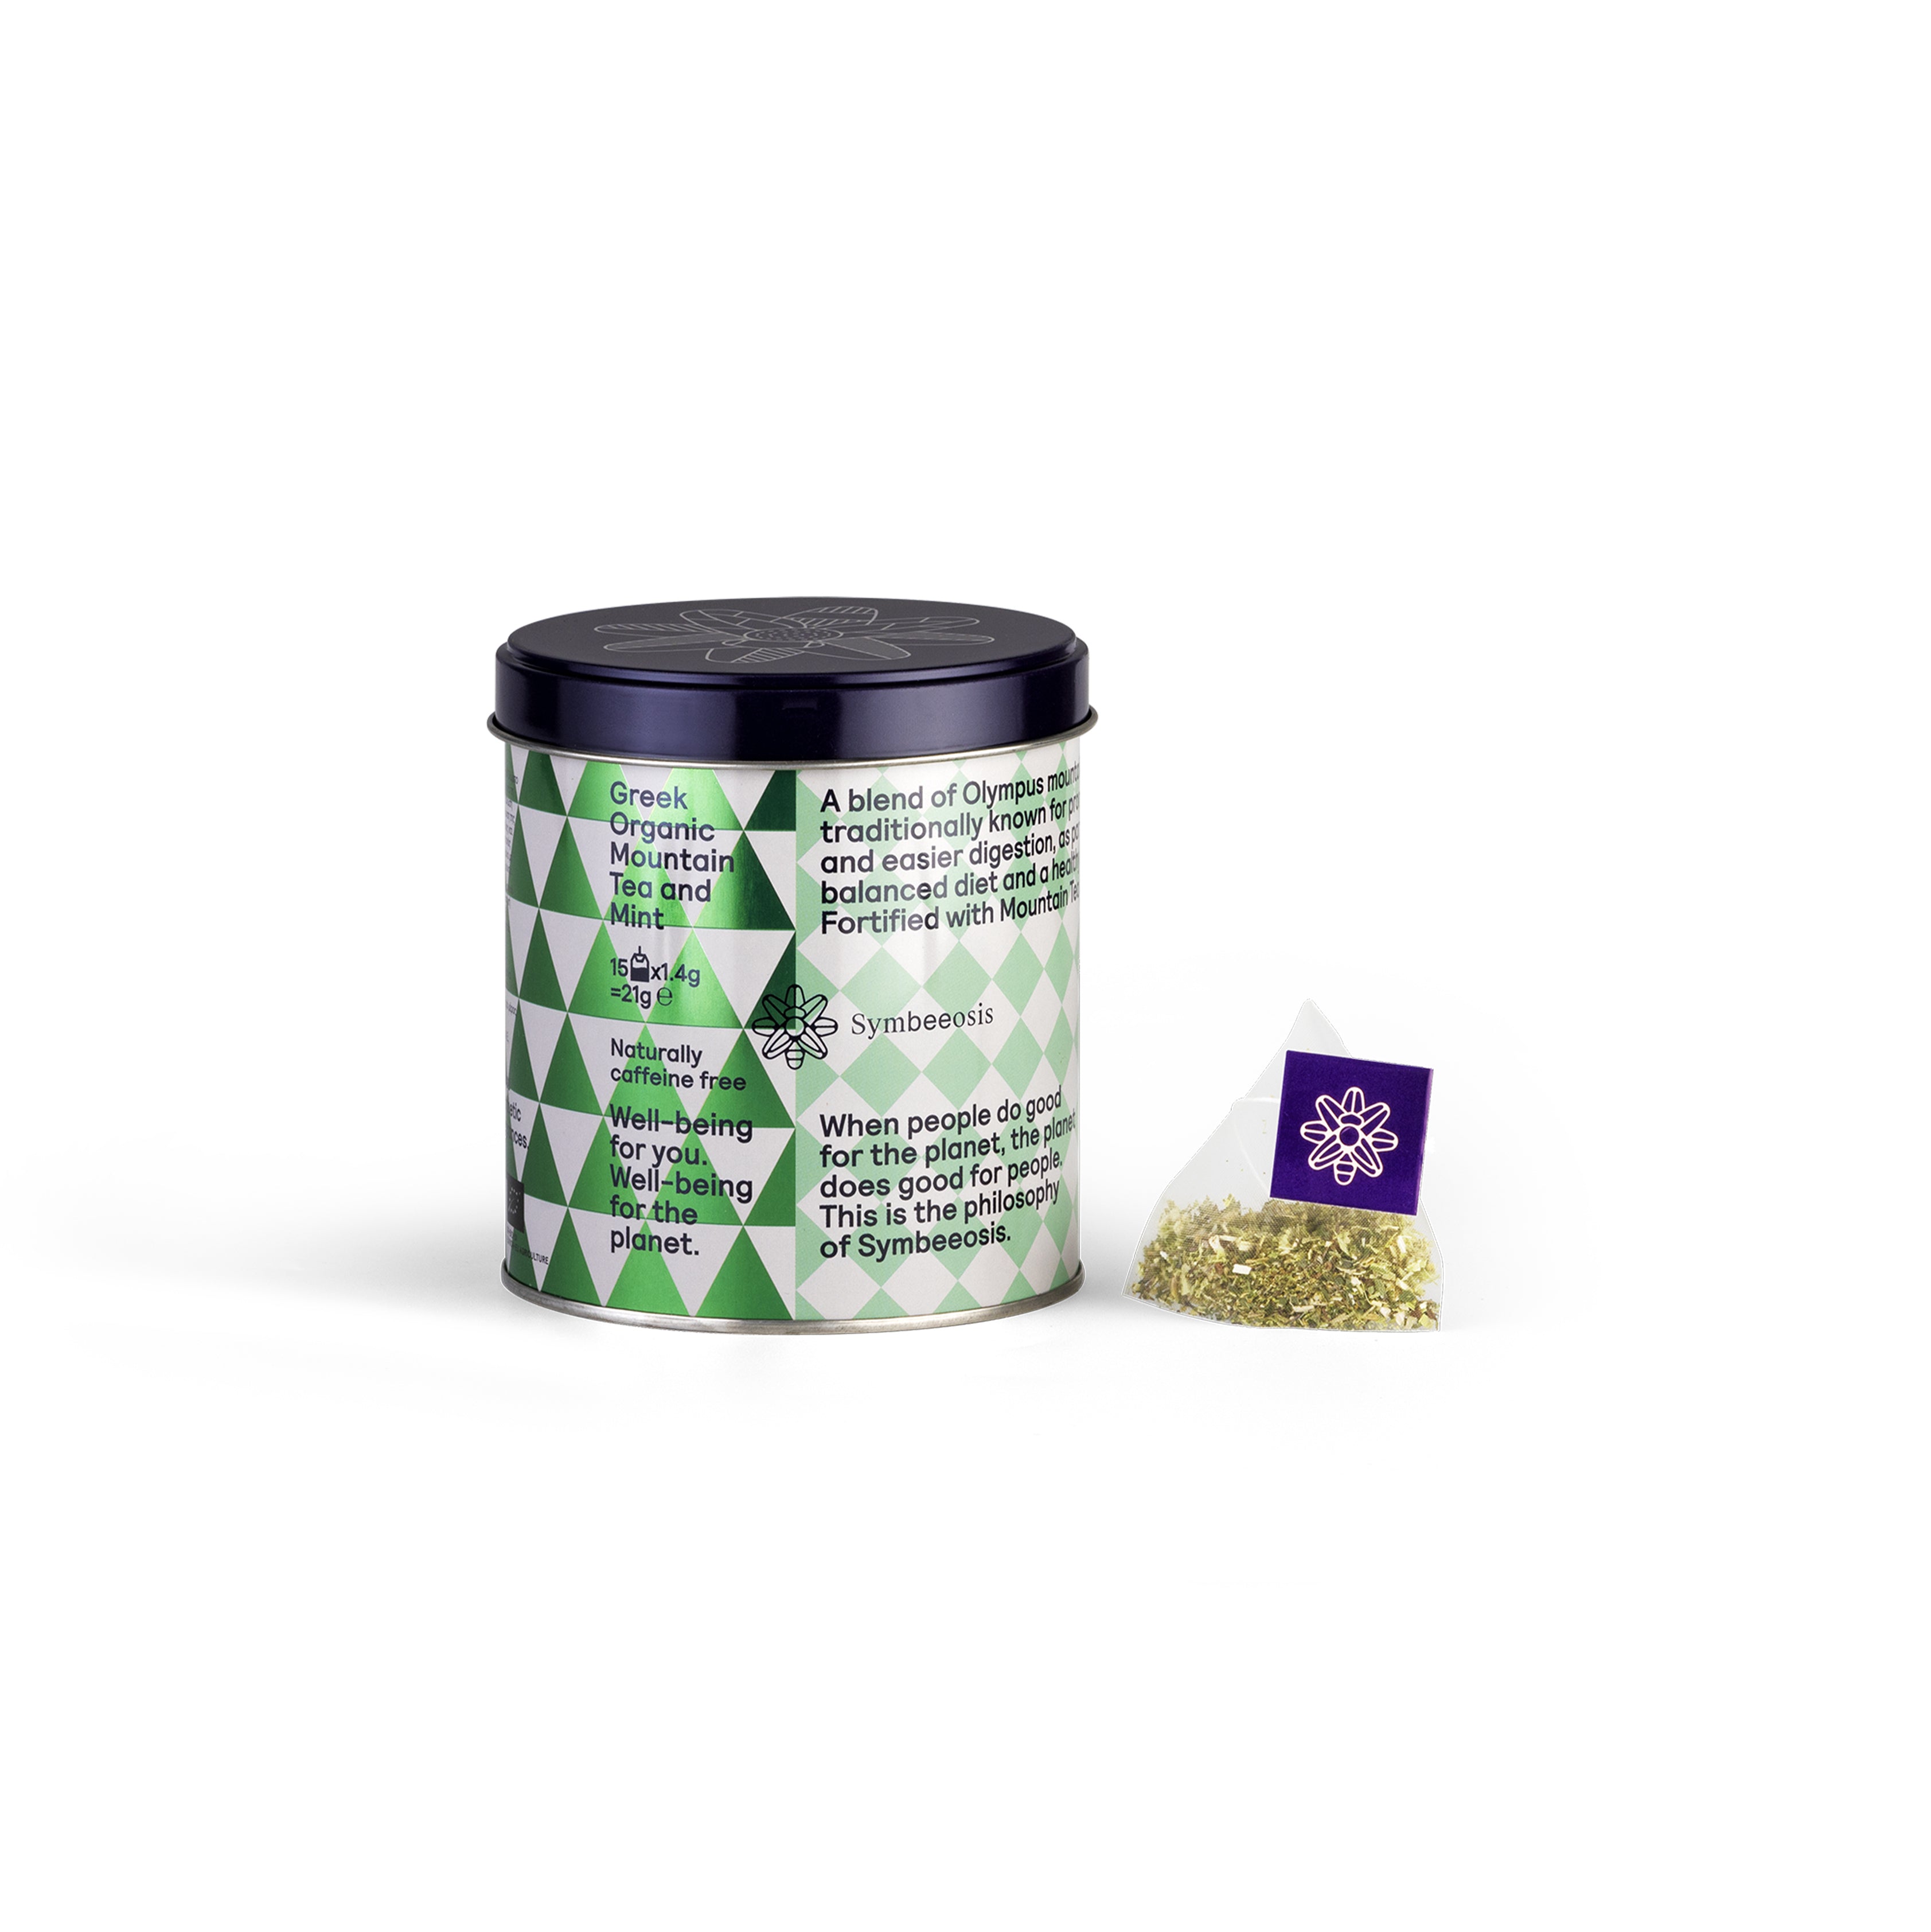 Greek Organic Mountain Tea & Mint 15τμχ